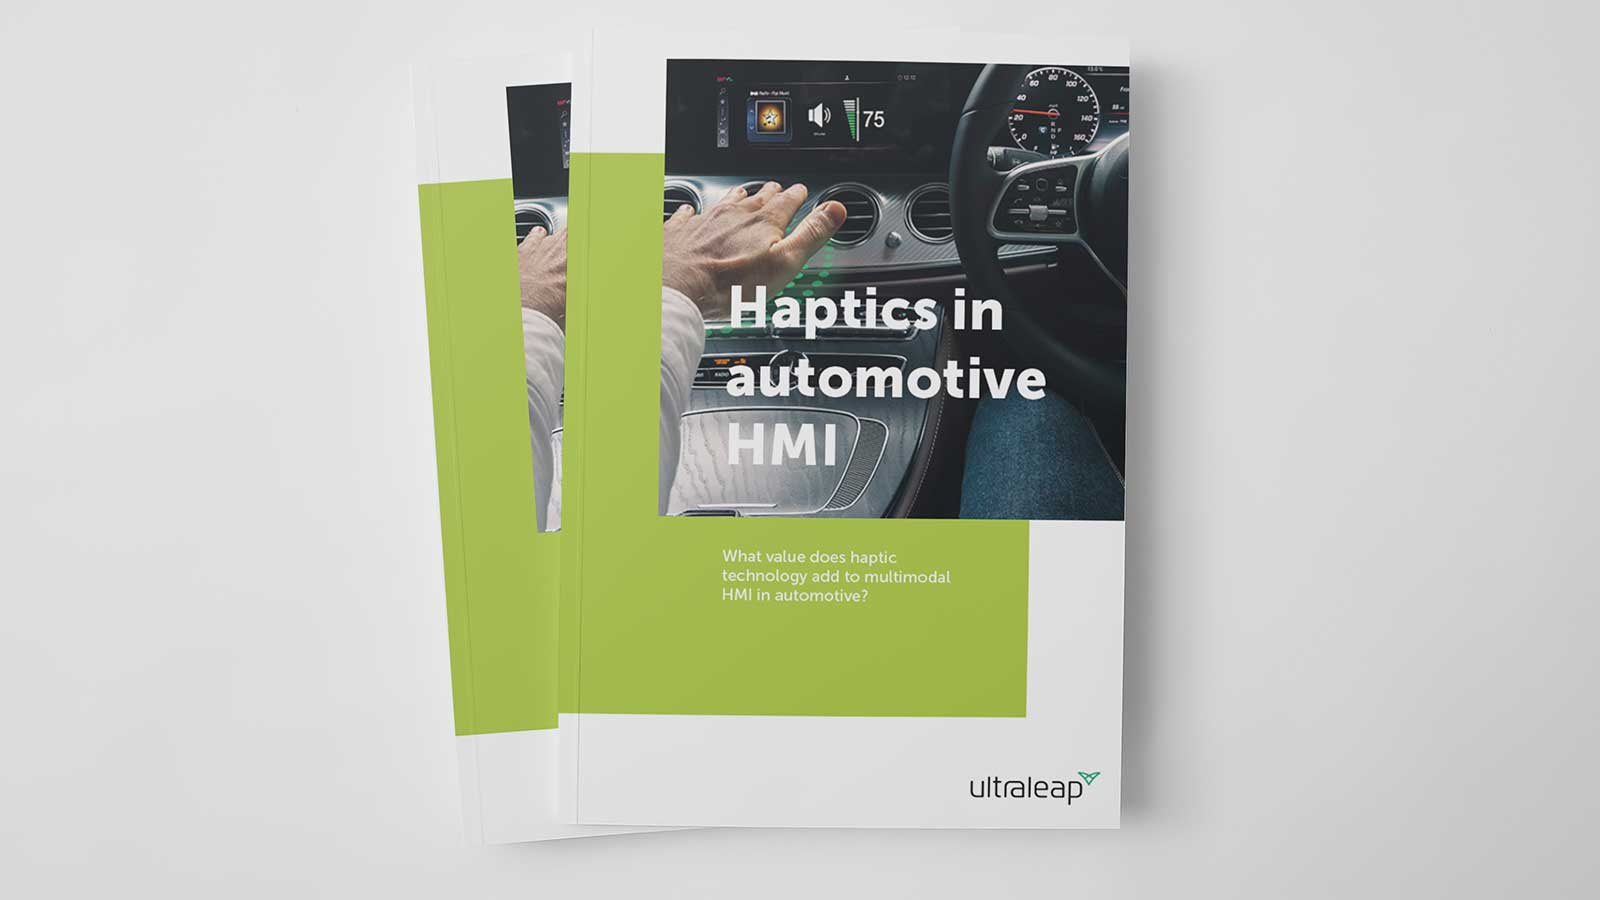 Ultraleap haptics in automotive hmi whitepaper cover